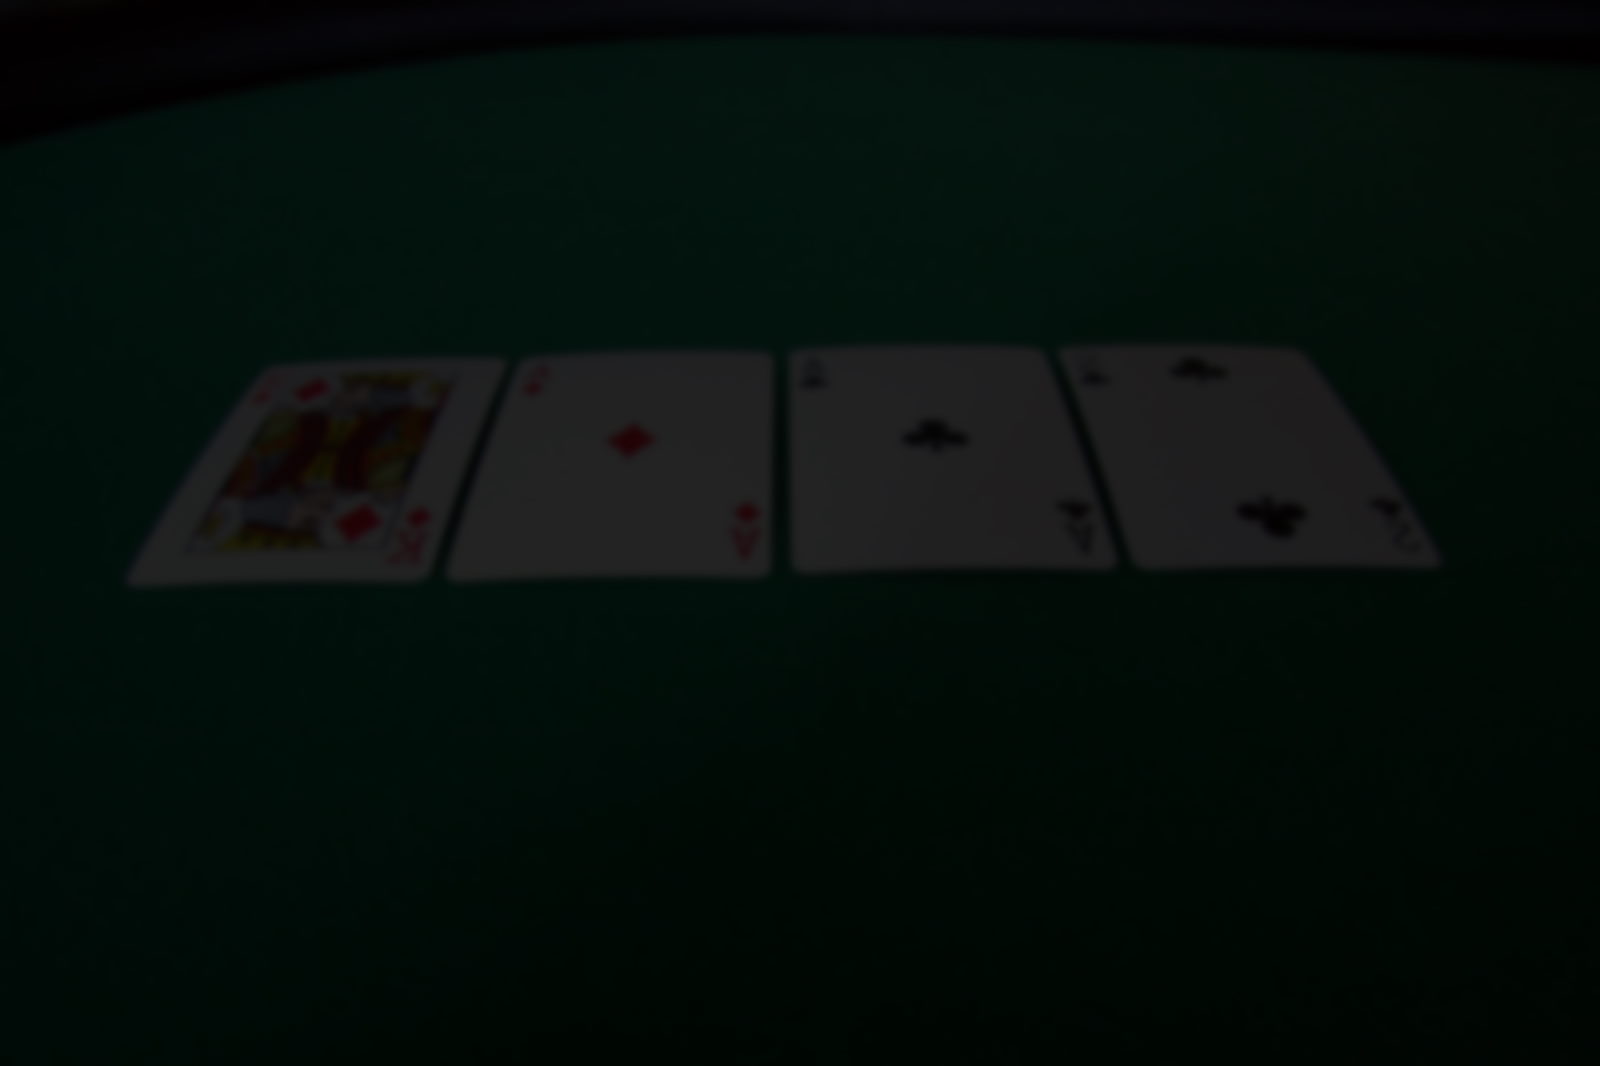 Limit poker strategy